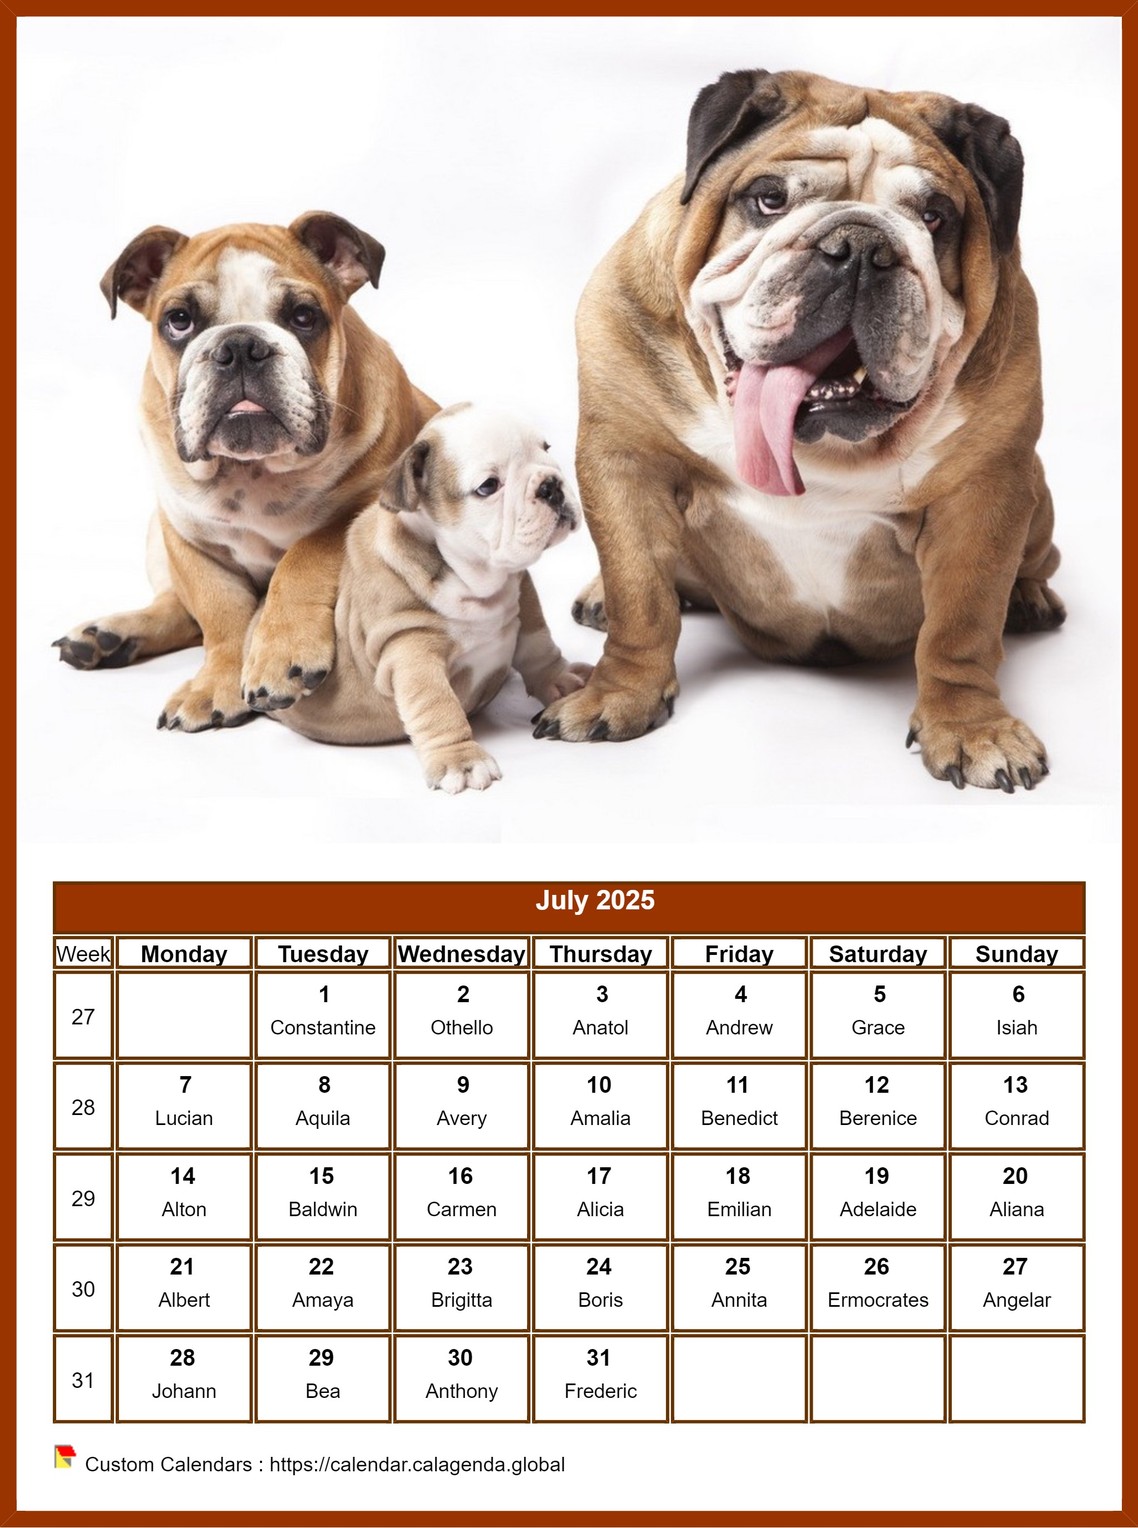 Calendar July 2025 dogs